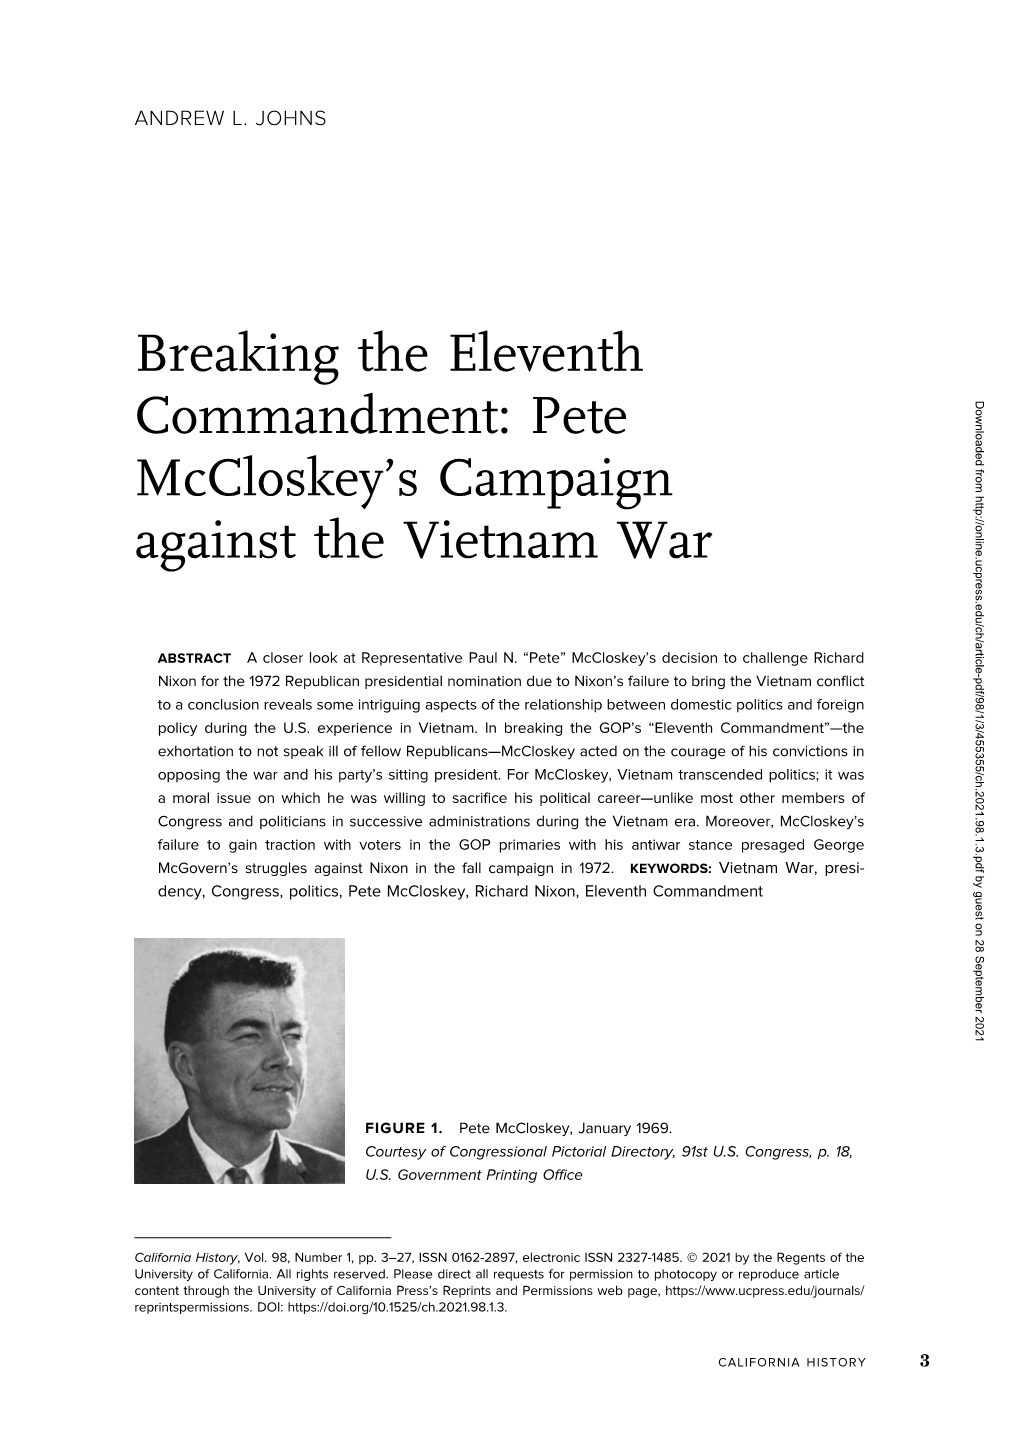 Breaking the Eleventh Commandment: Pete Mccloskey's Campaign